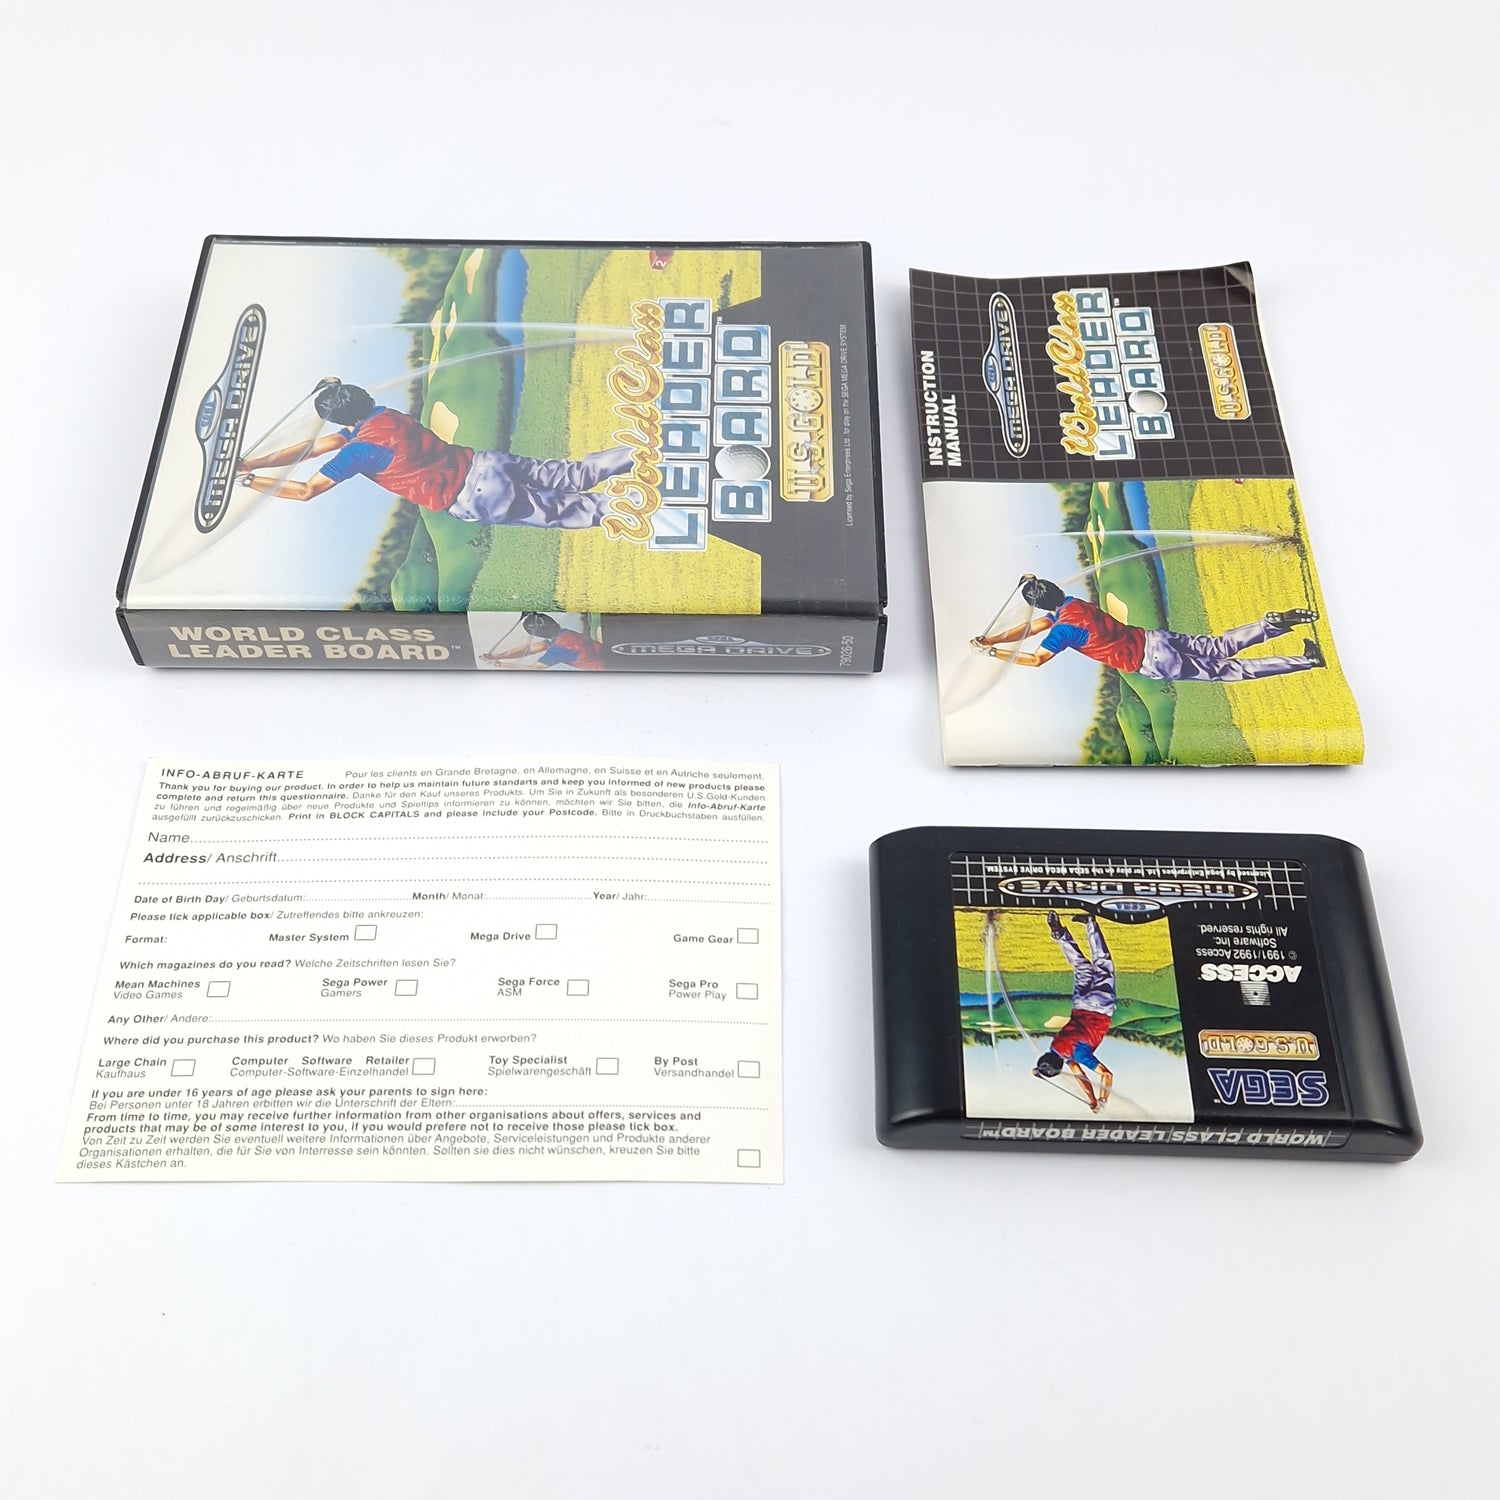 Sega Mega Drive Game: World Class Leader Board - OVP Instructions Module PAL MD